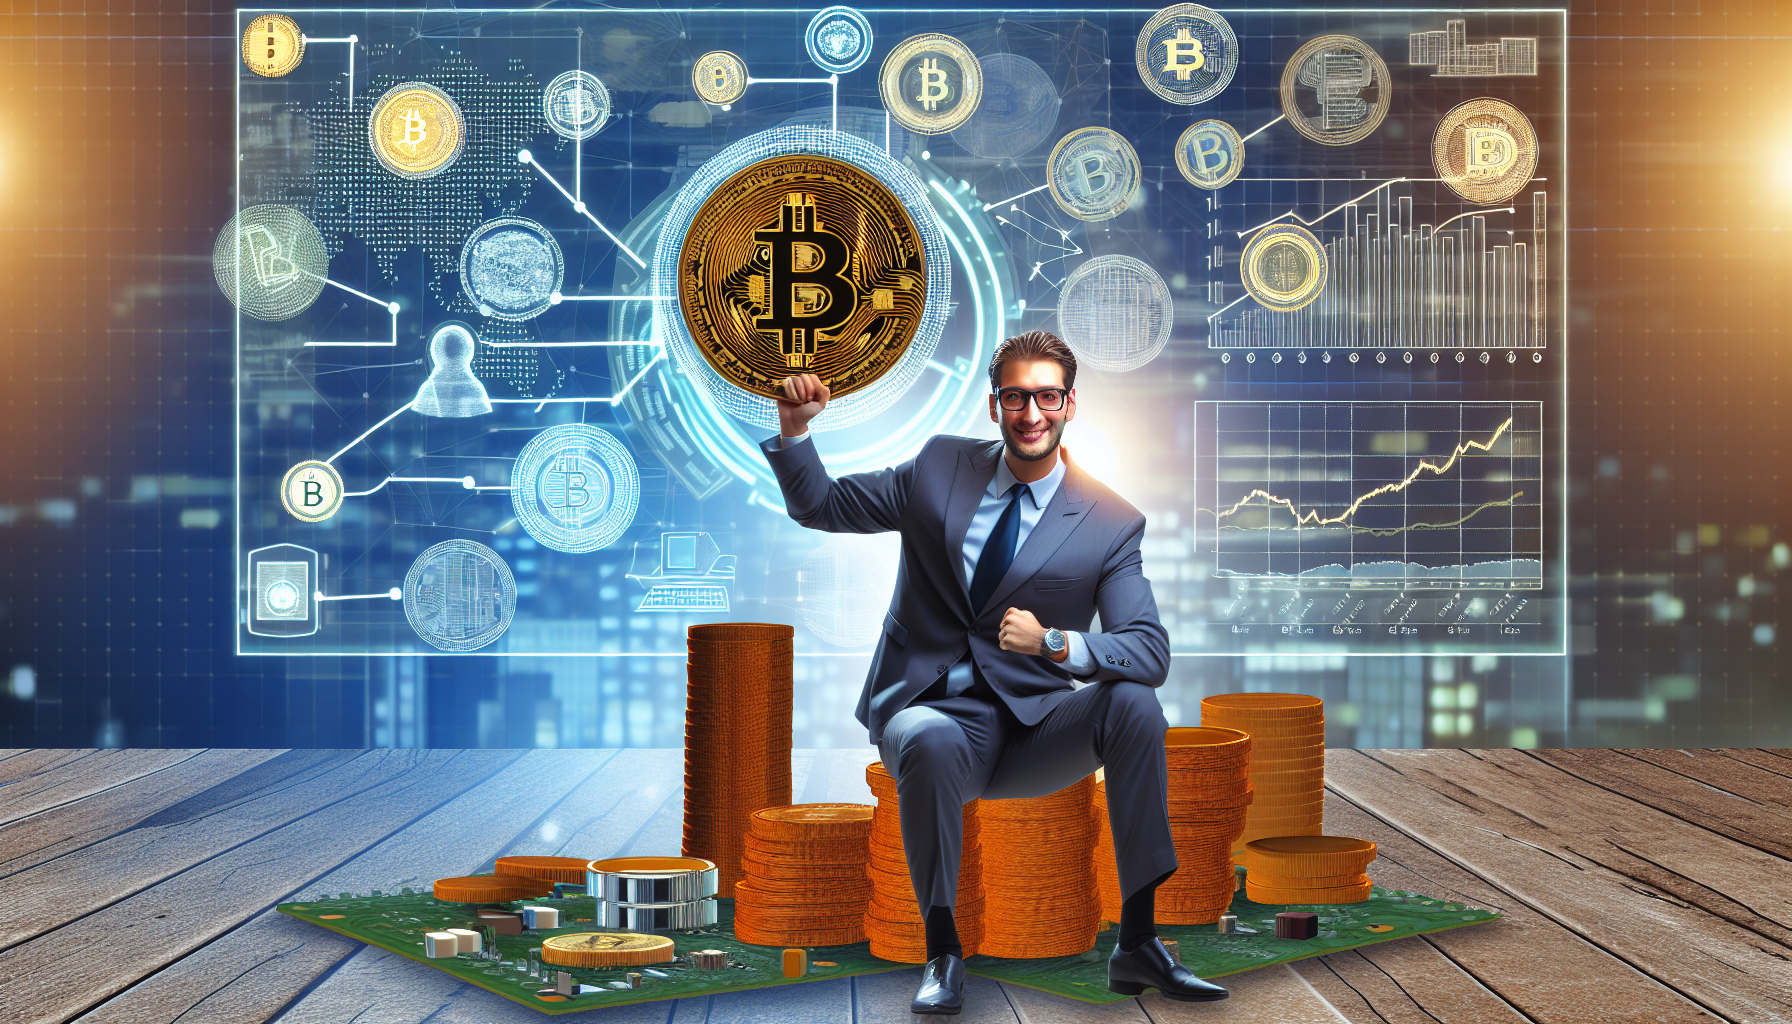 Jim Cramer Endorses Bitcoin as a Permanent Technological Marvel